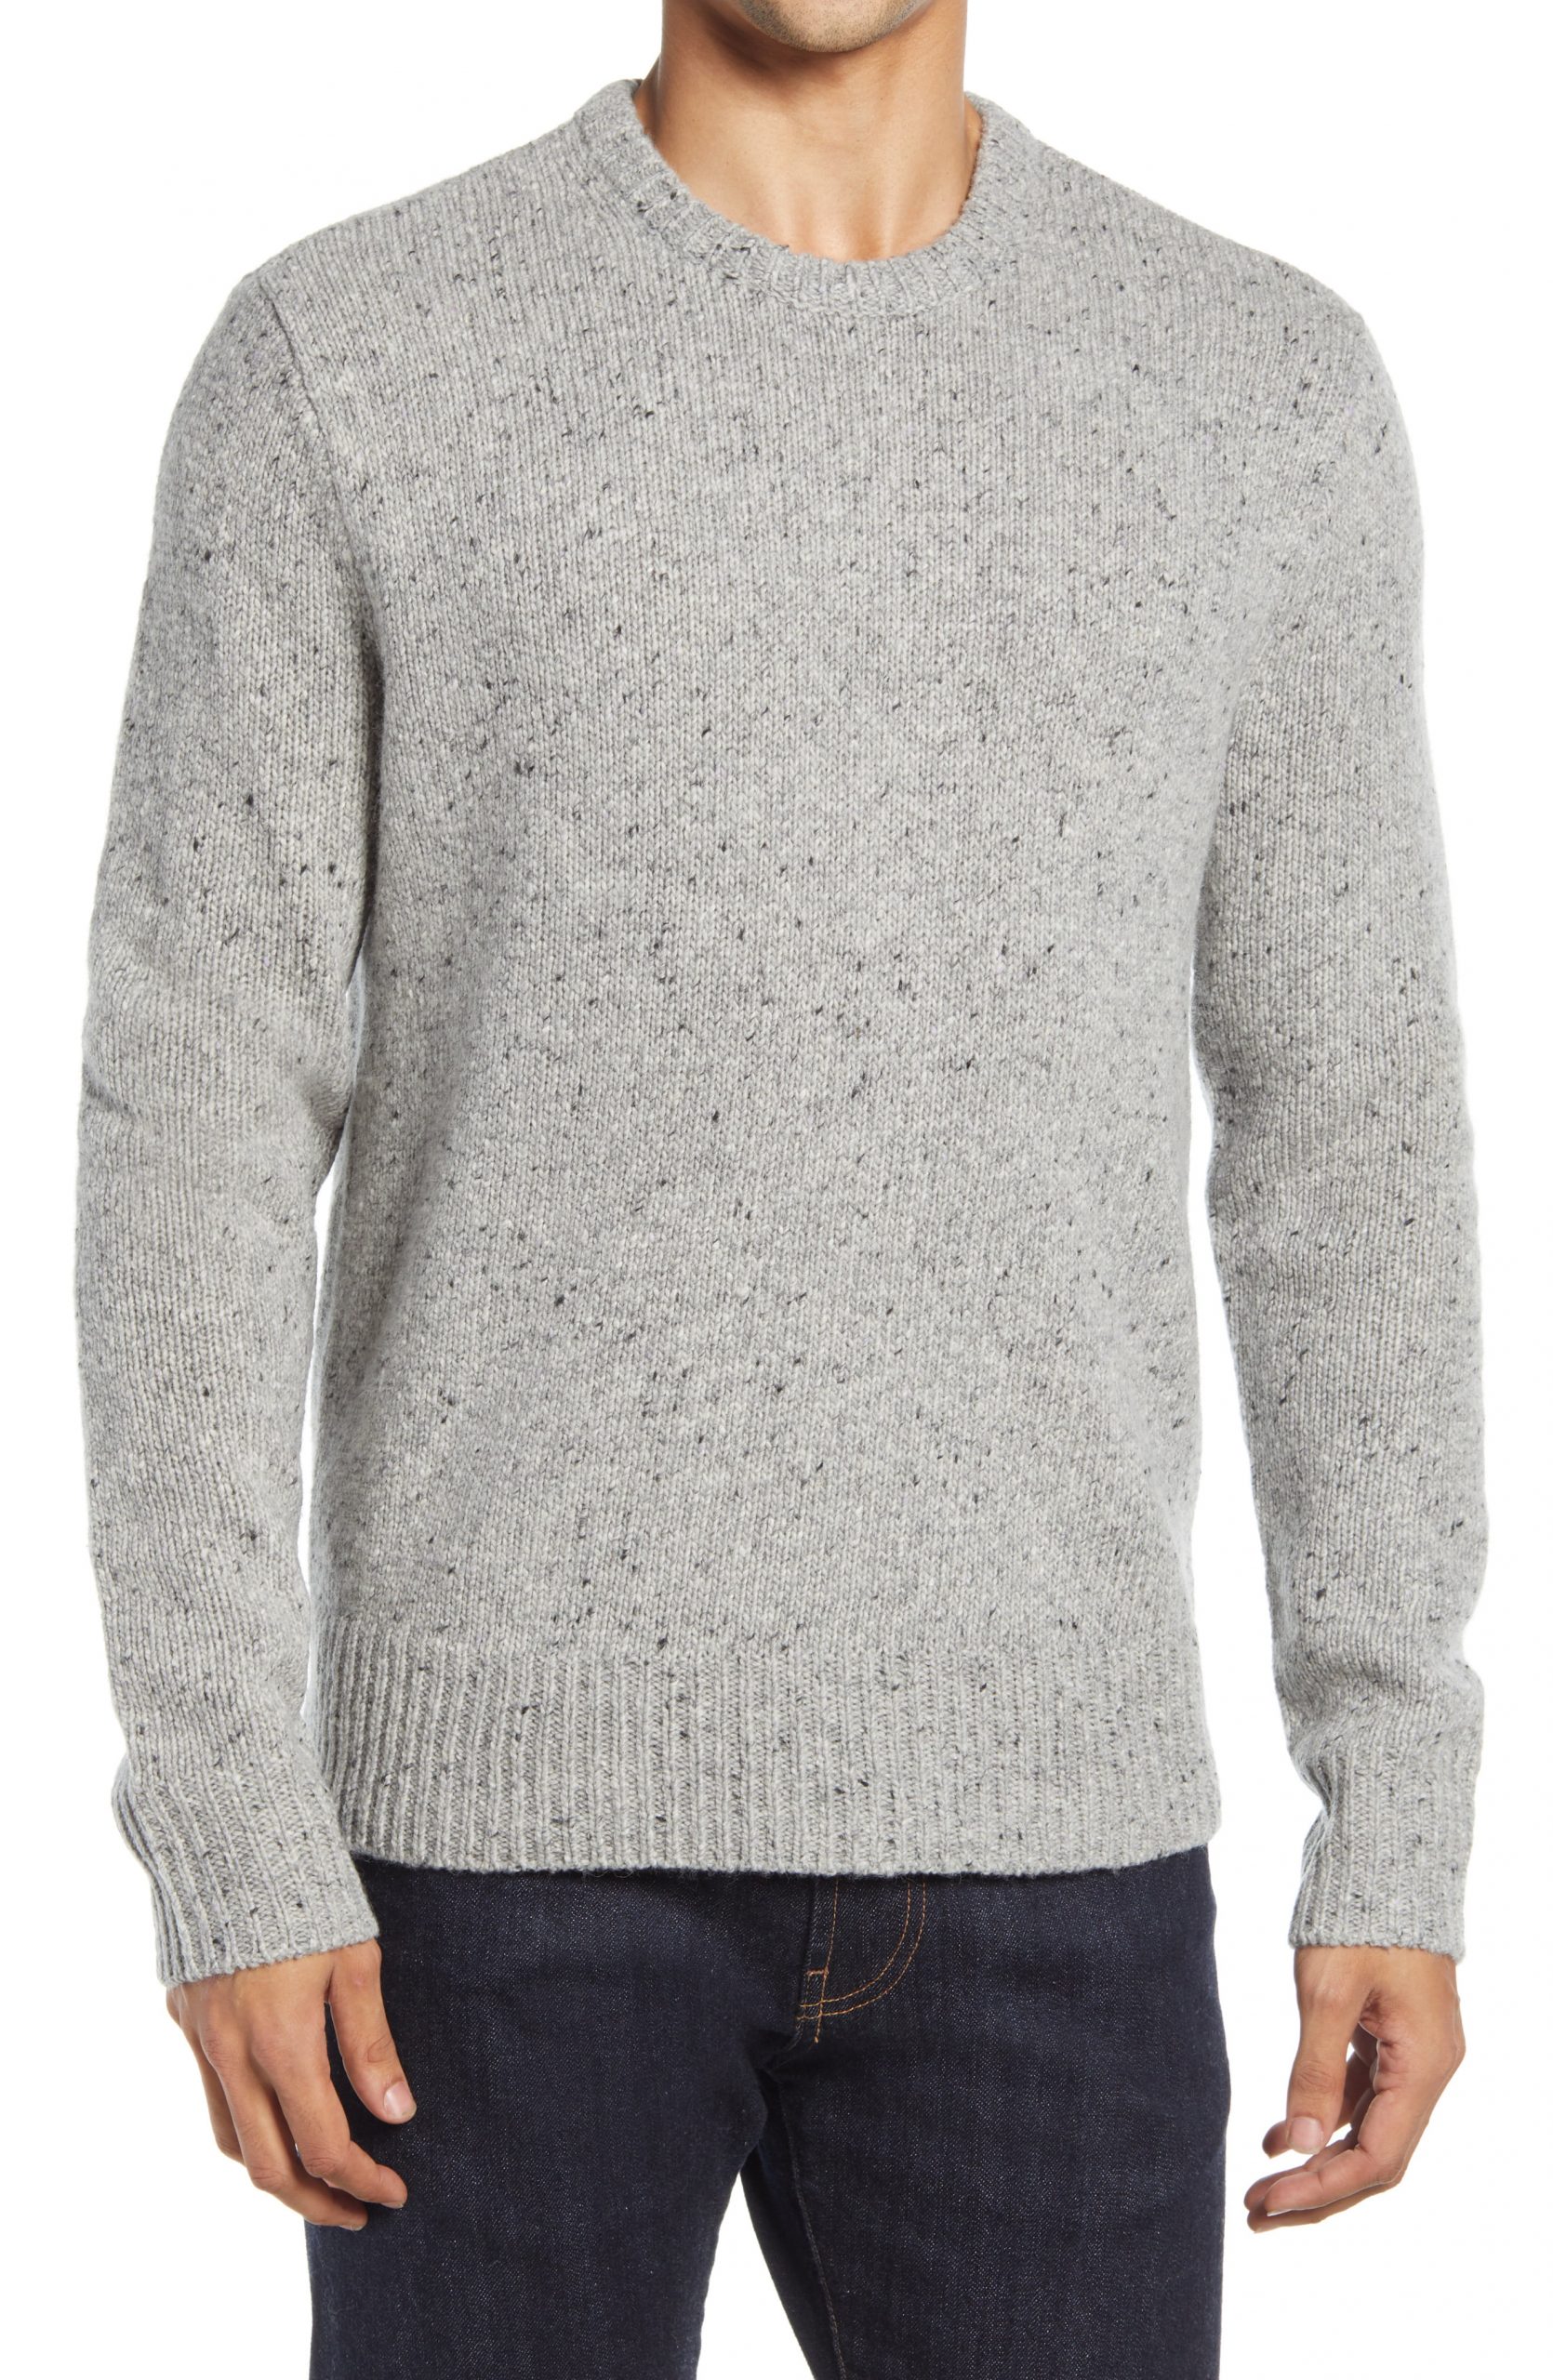 Men’s Madewell Crewneck Sweater, Size Small - Grey | The Fashionisto